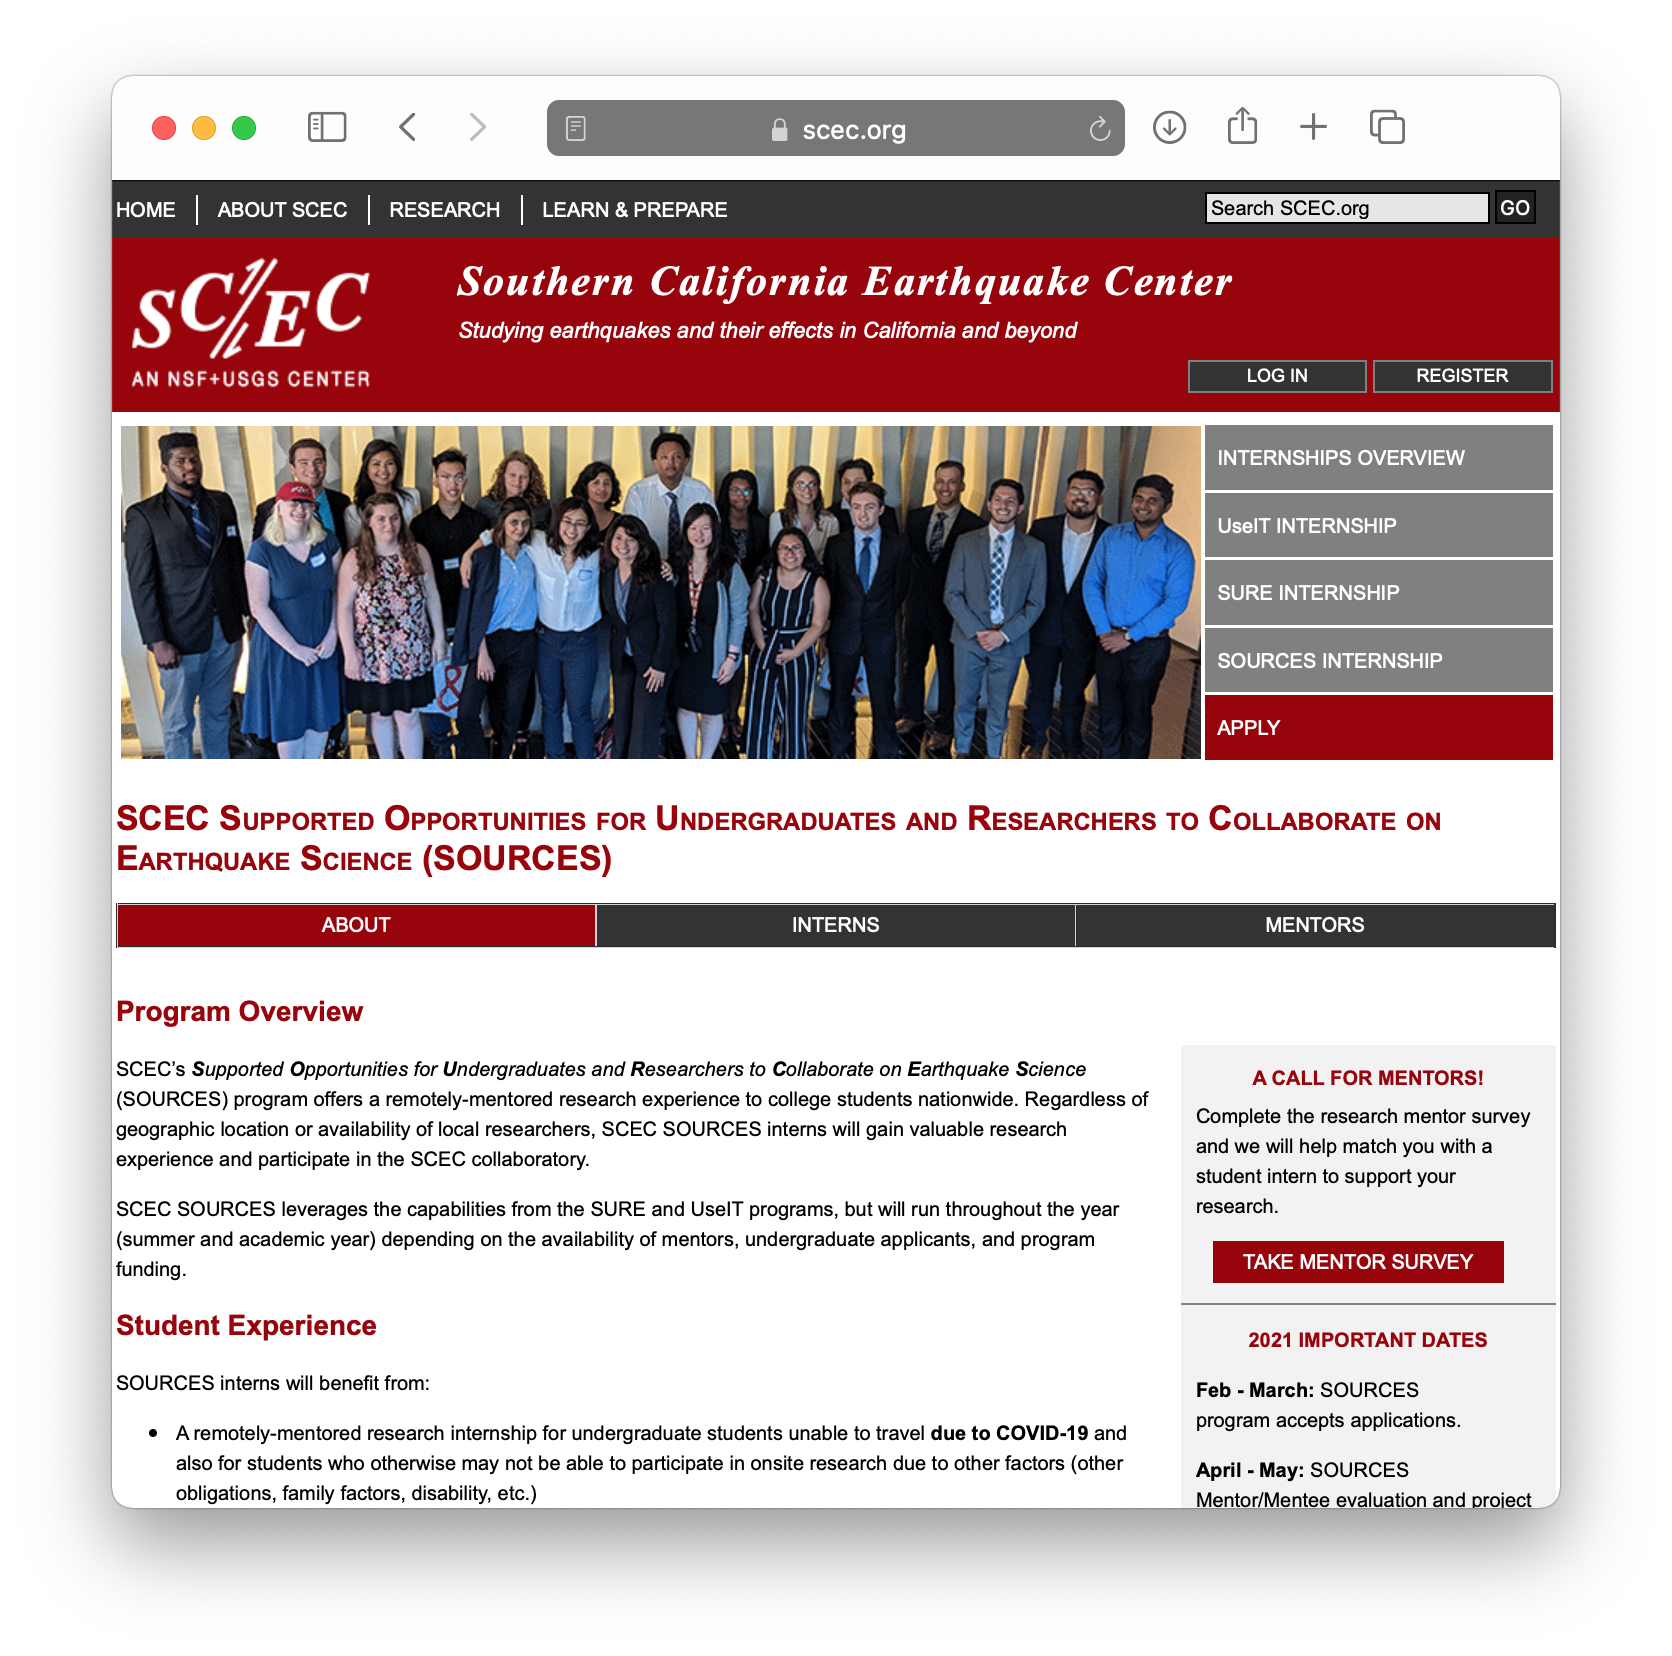 SCEC SOURCES